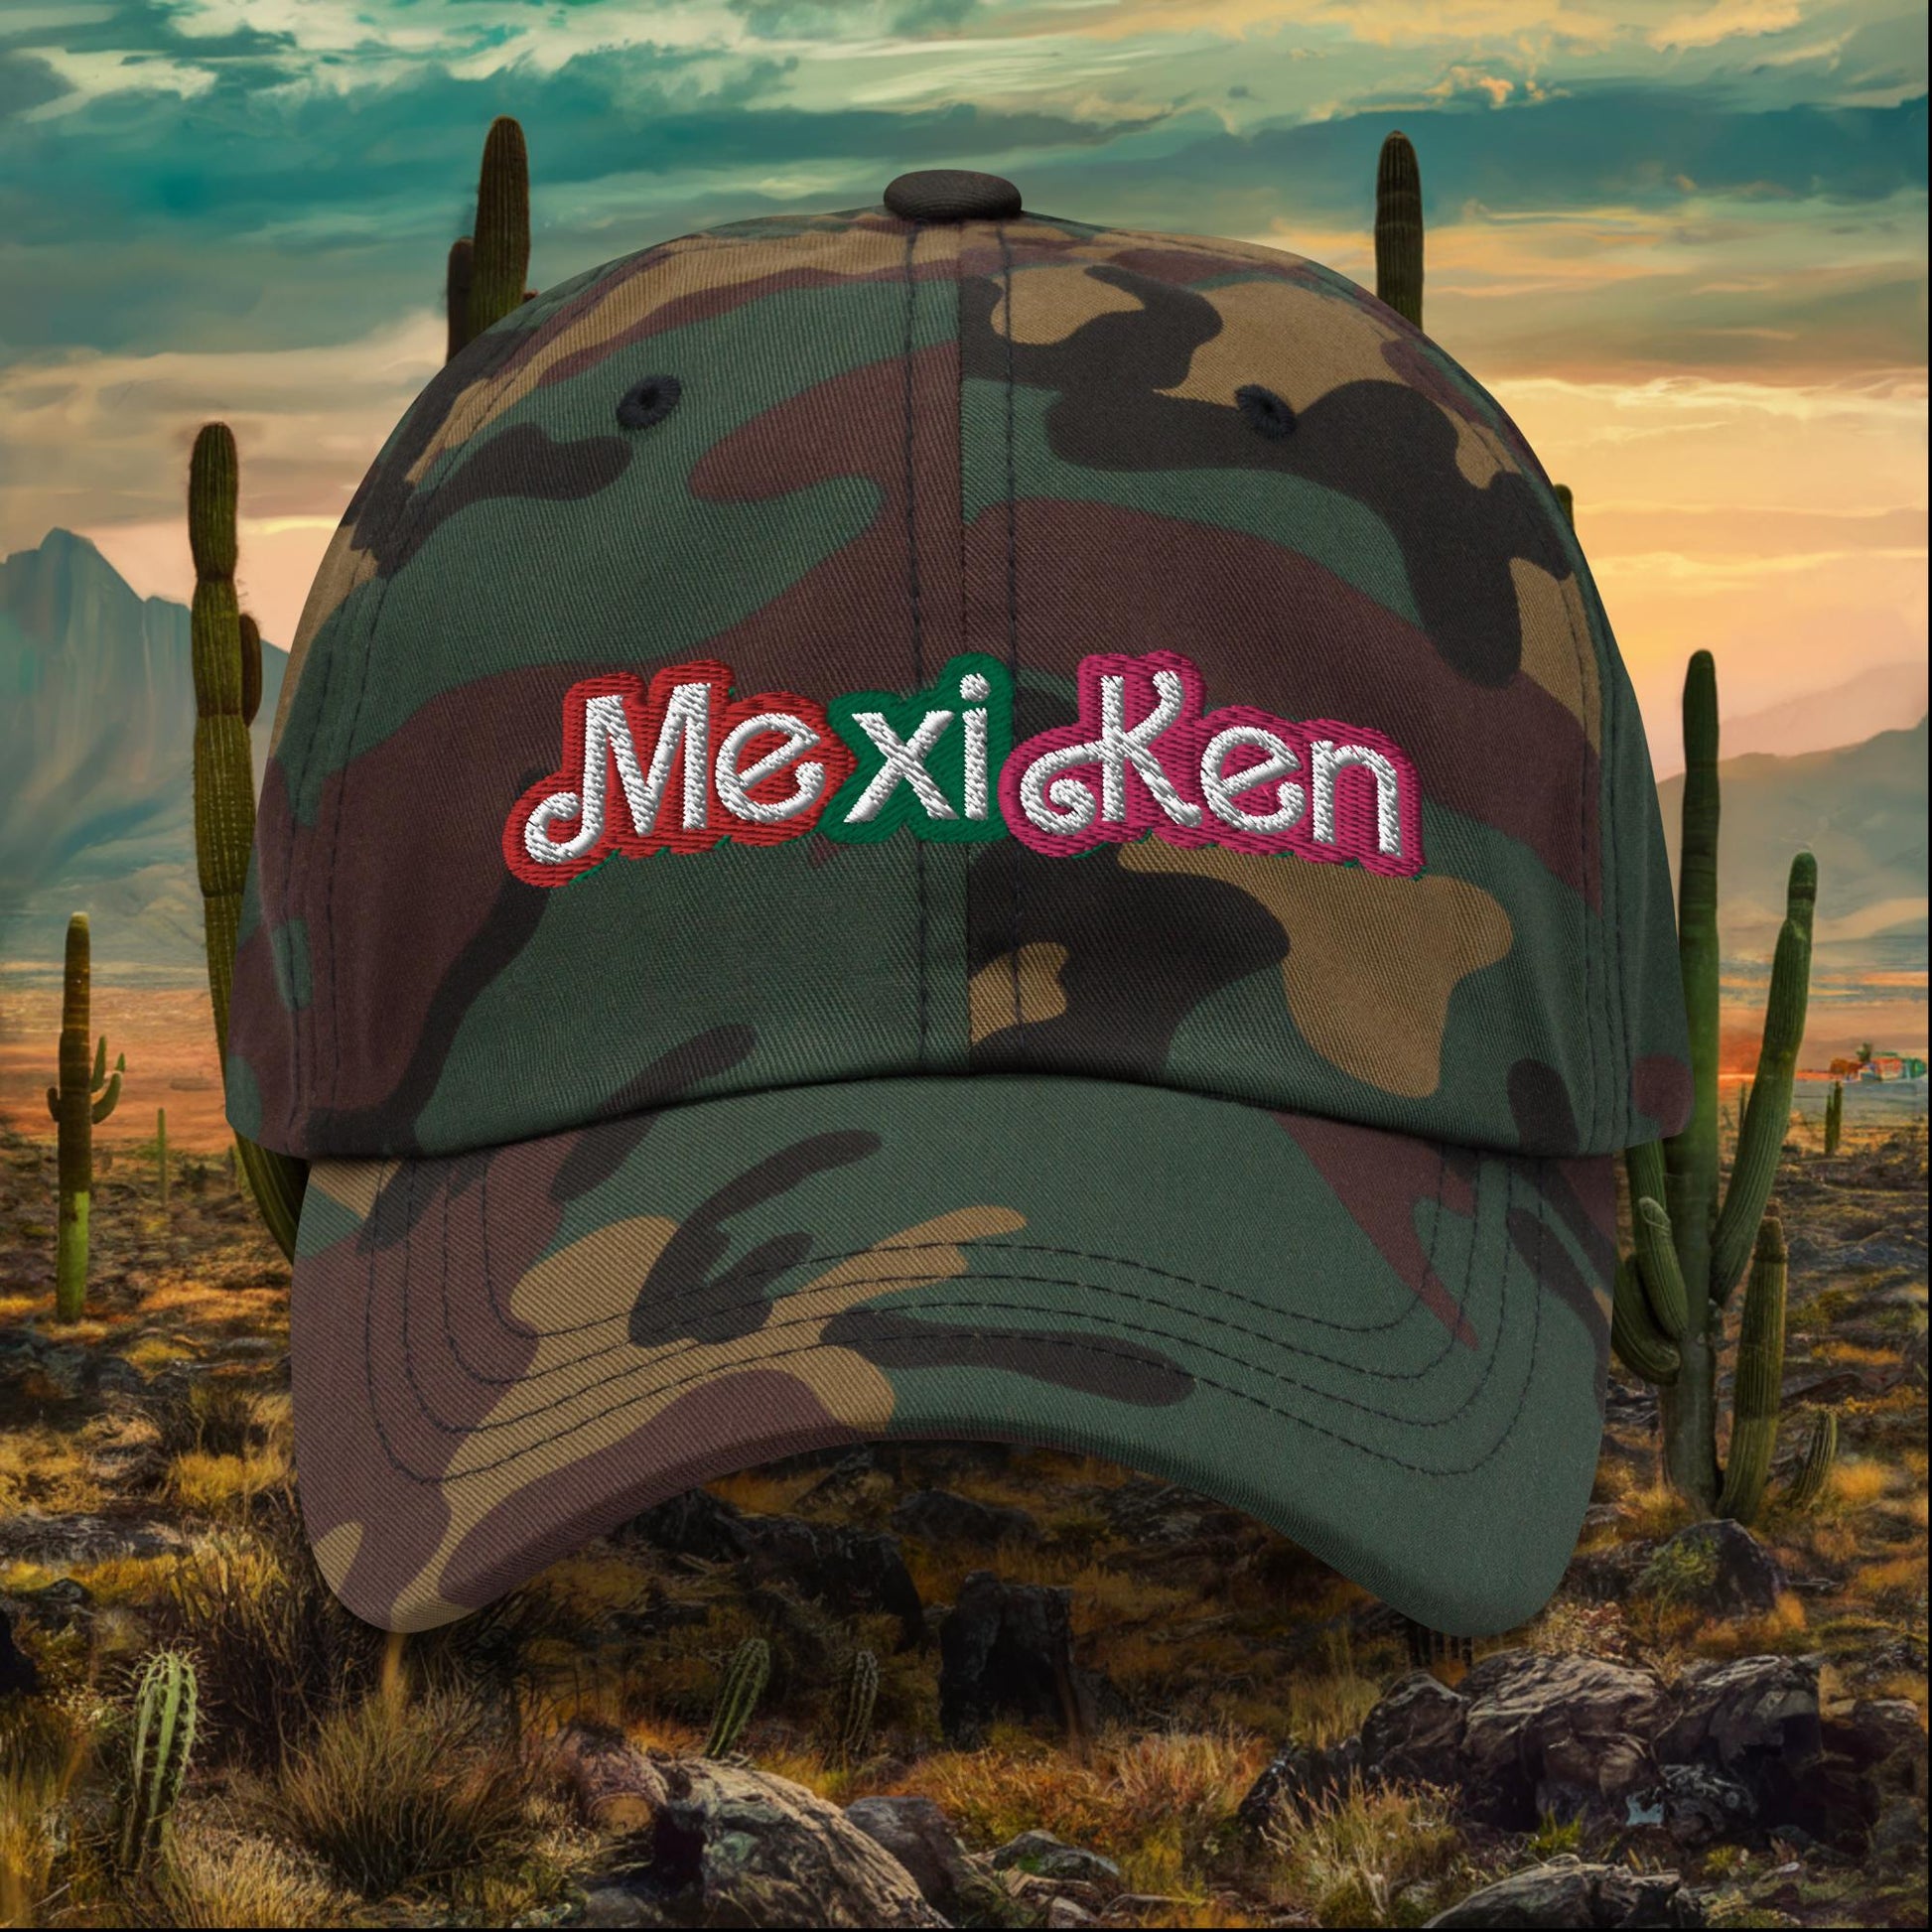 MexiKen Ken Barbie Mexico Mexican Mexicana Latino Latina Latinx Dad hat Next Cult Brand